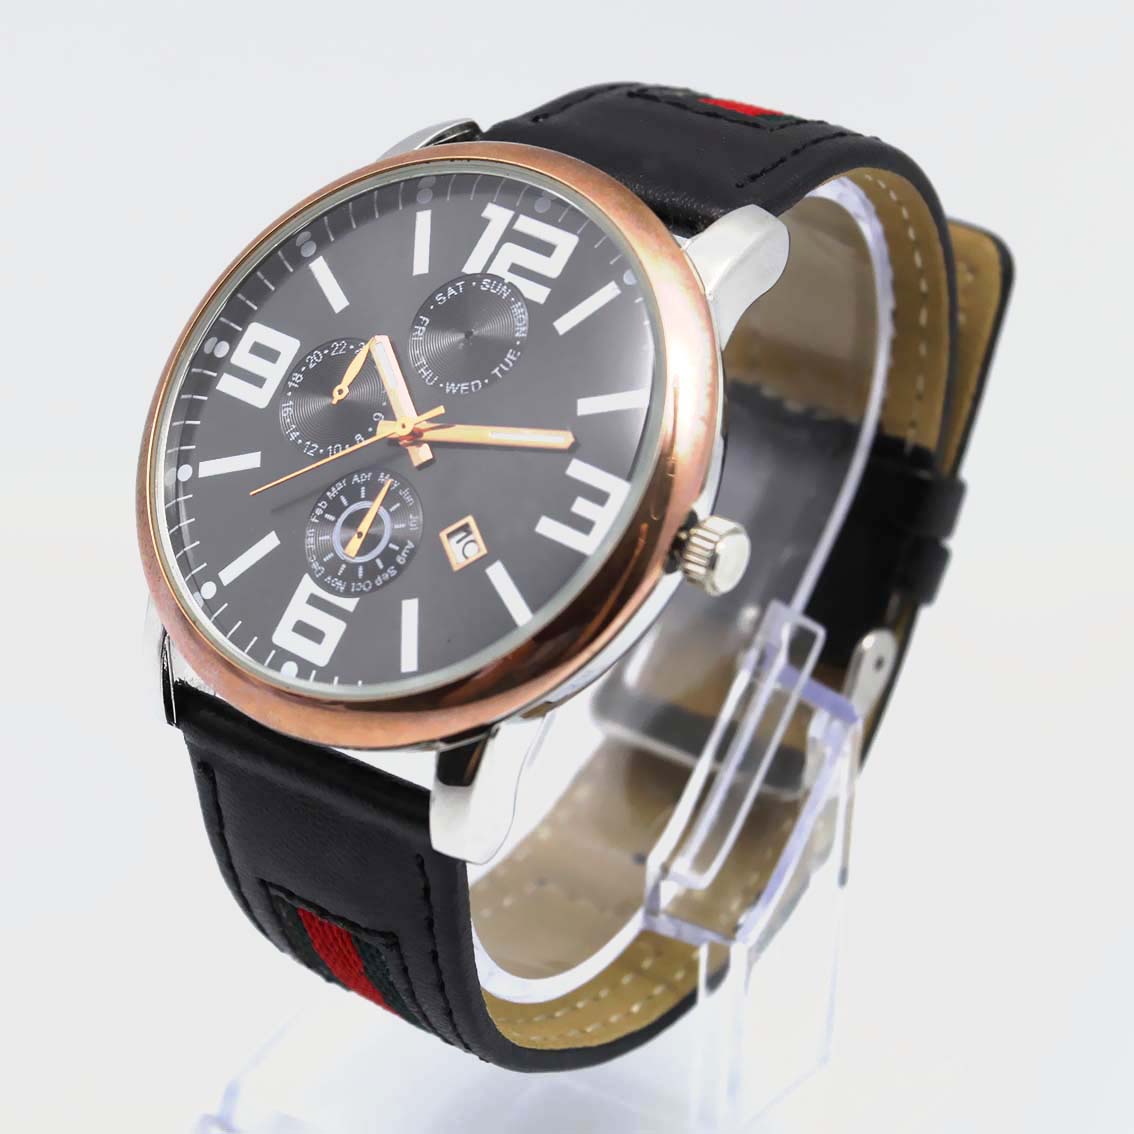 #02116Men's wristwatch quartz analog leather strap watch